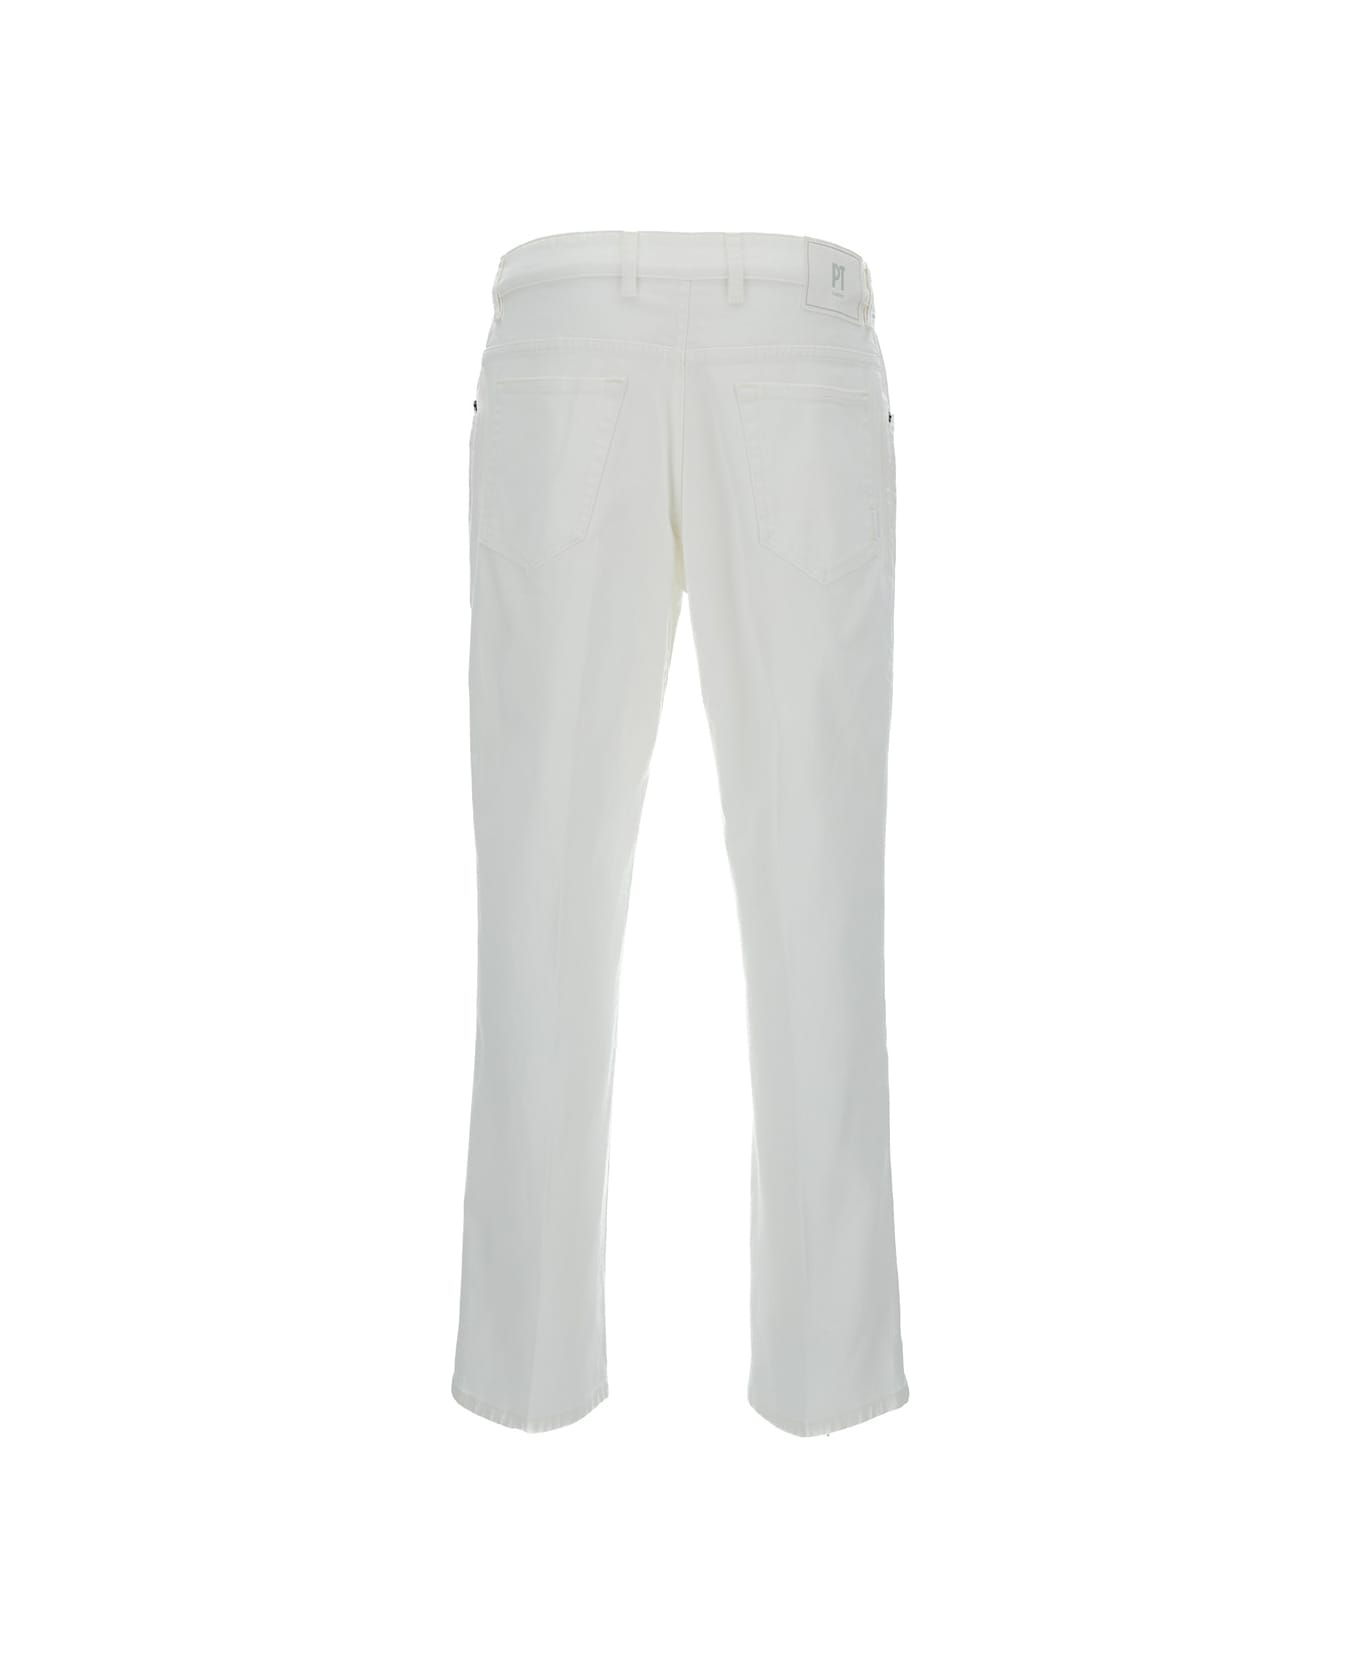 PT Torino White Tapered Leg Jeans In Cotton Blend Man - White